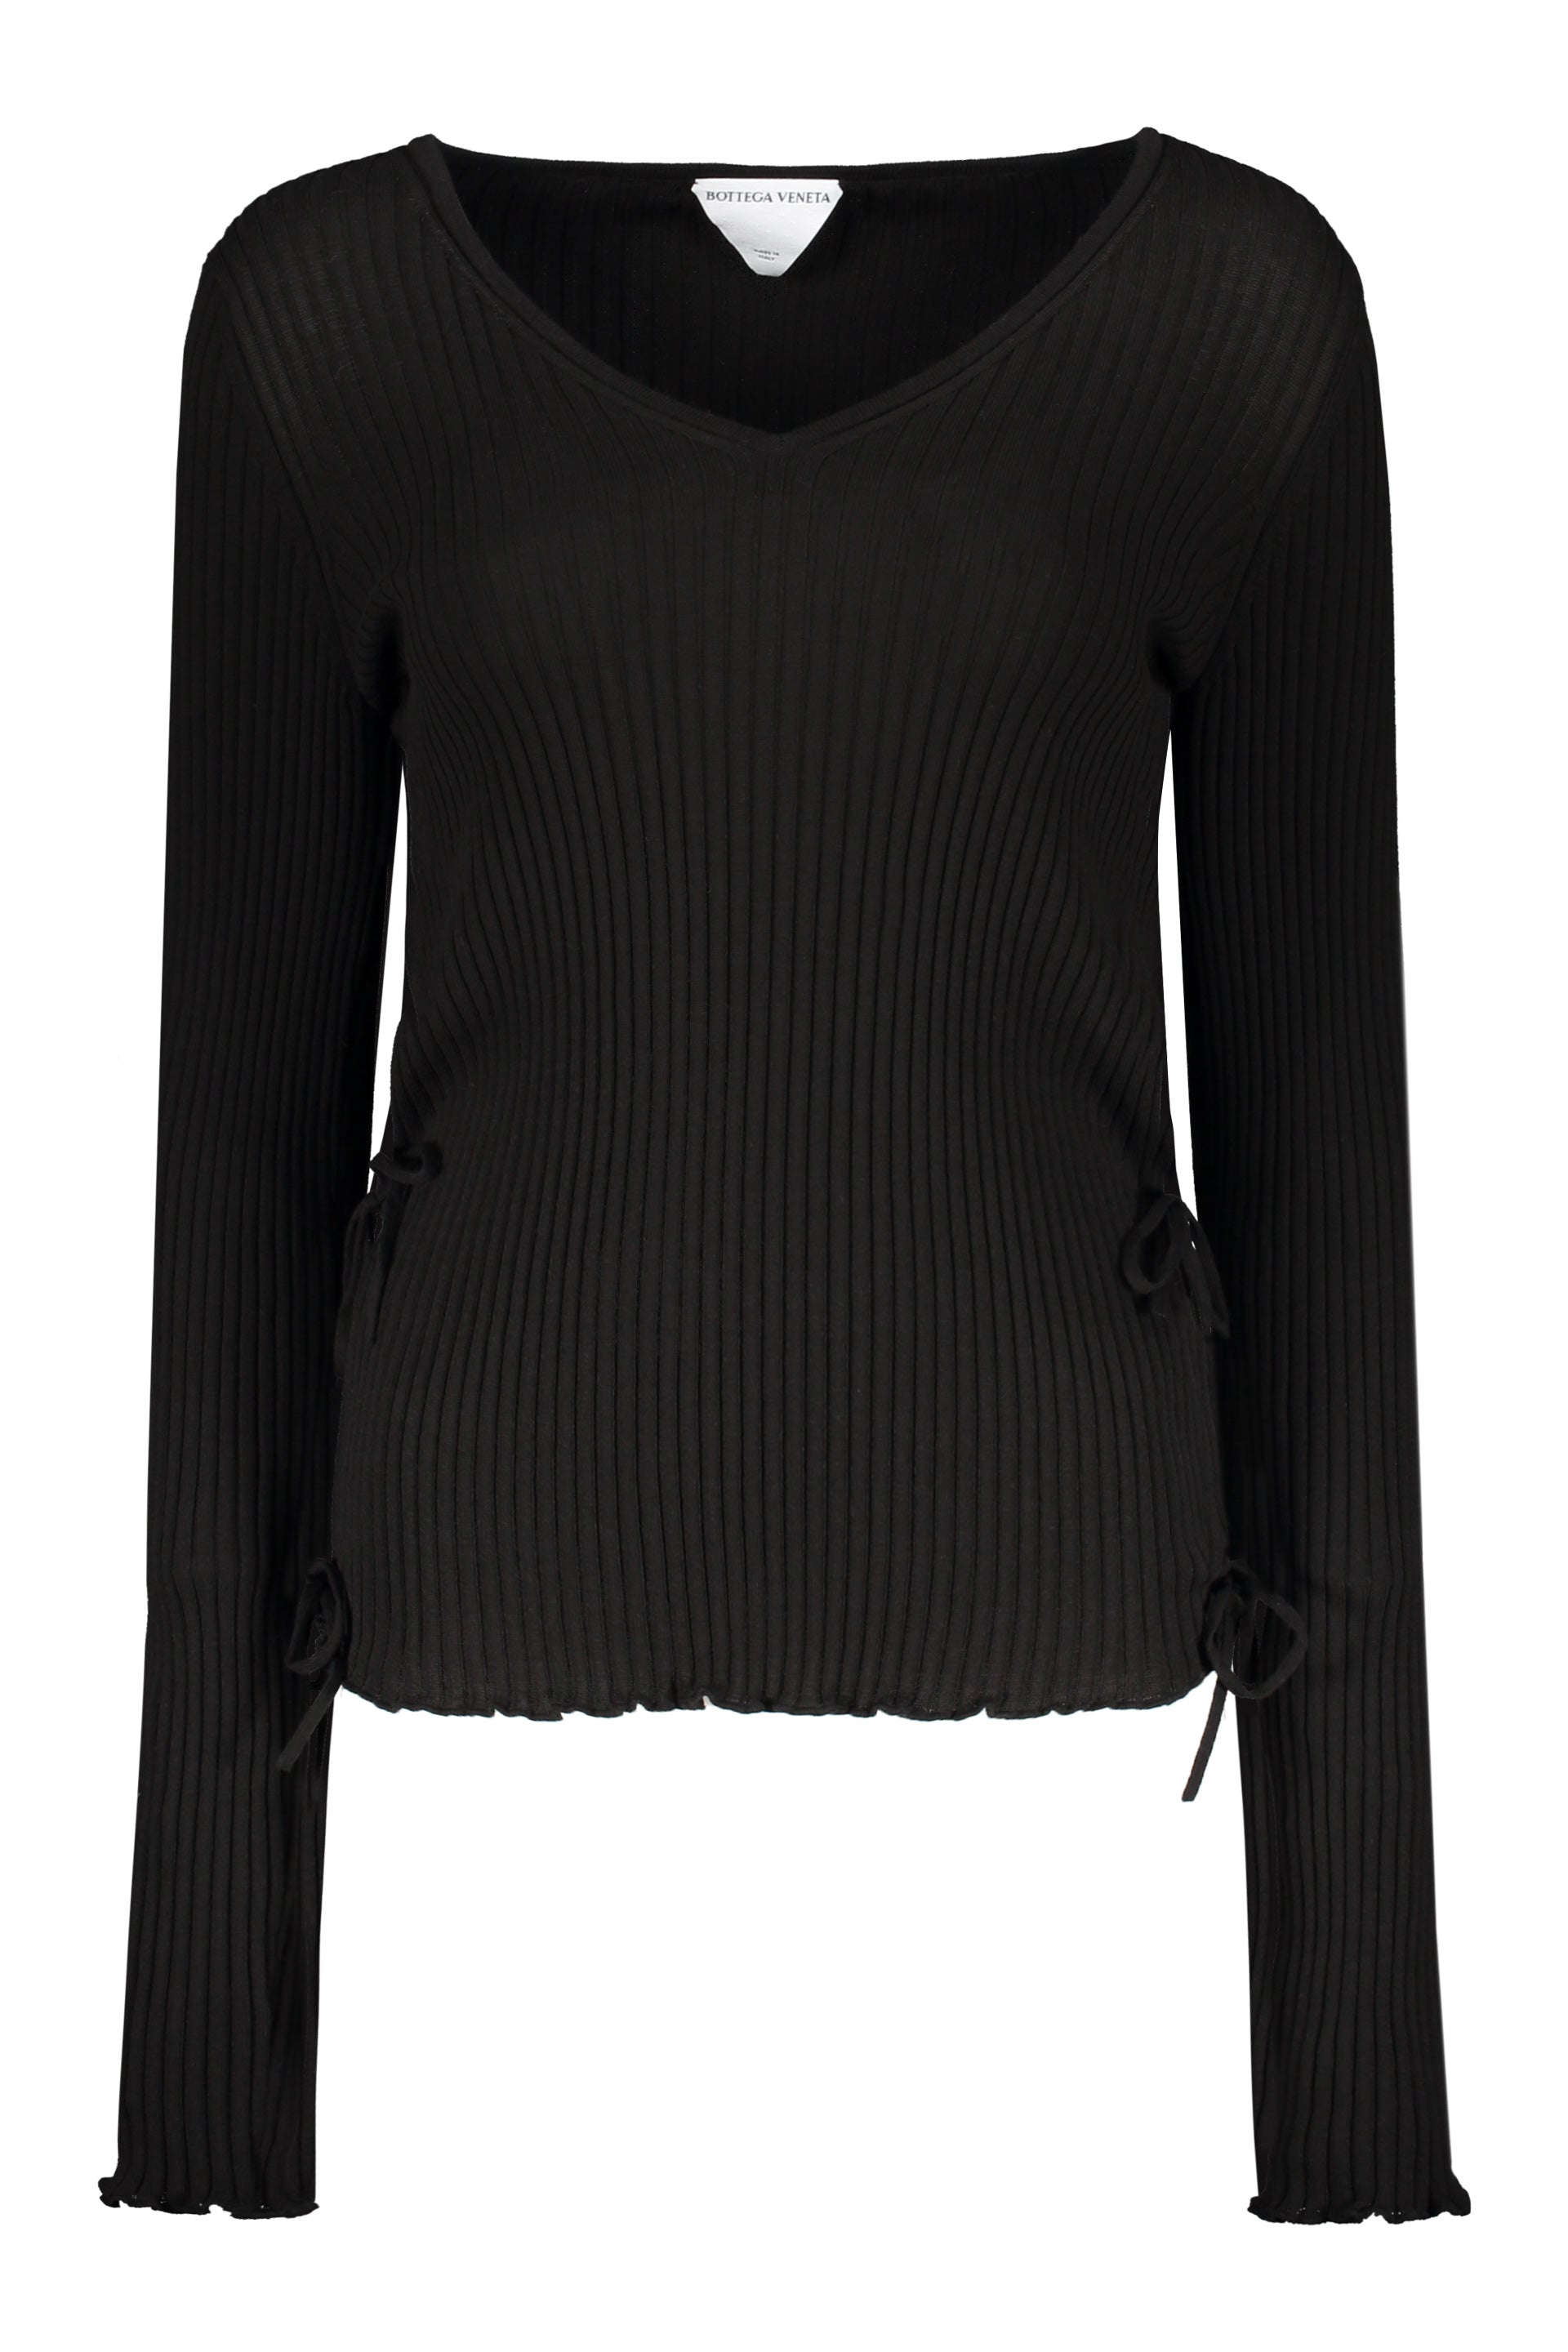 Cotton V-neck sweater-Bottega Veneta-OUTLET-SALE-M-ARCHIVIST